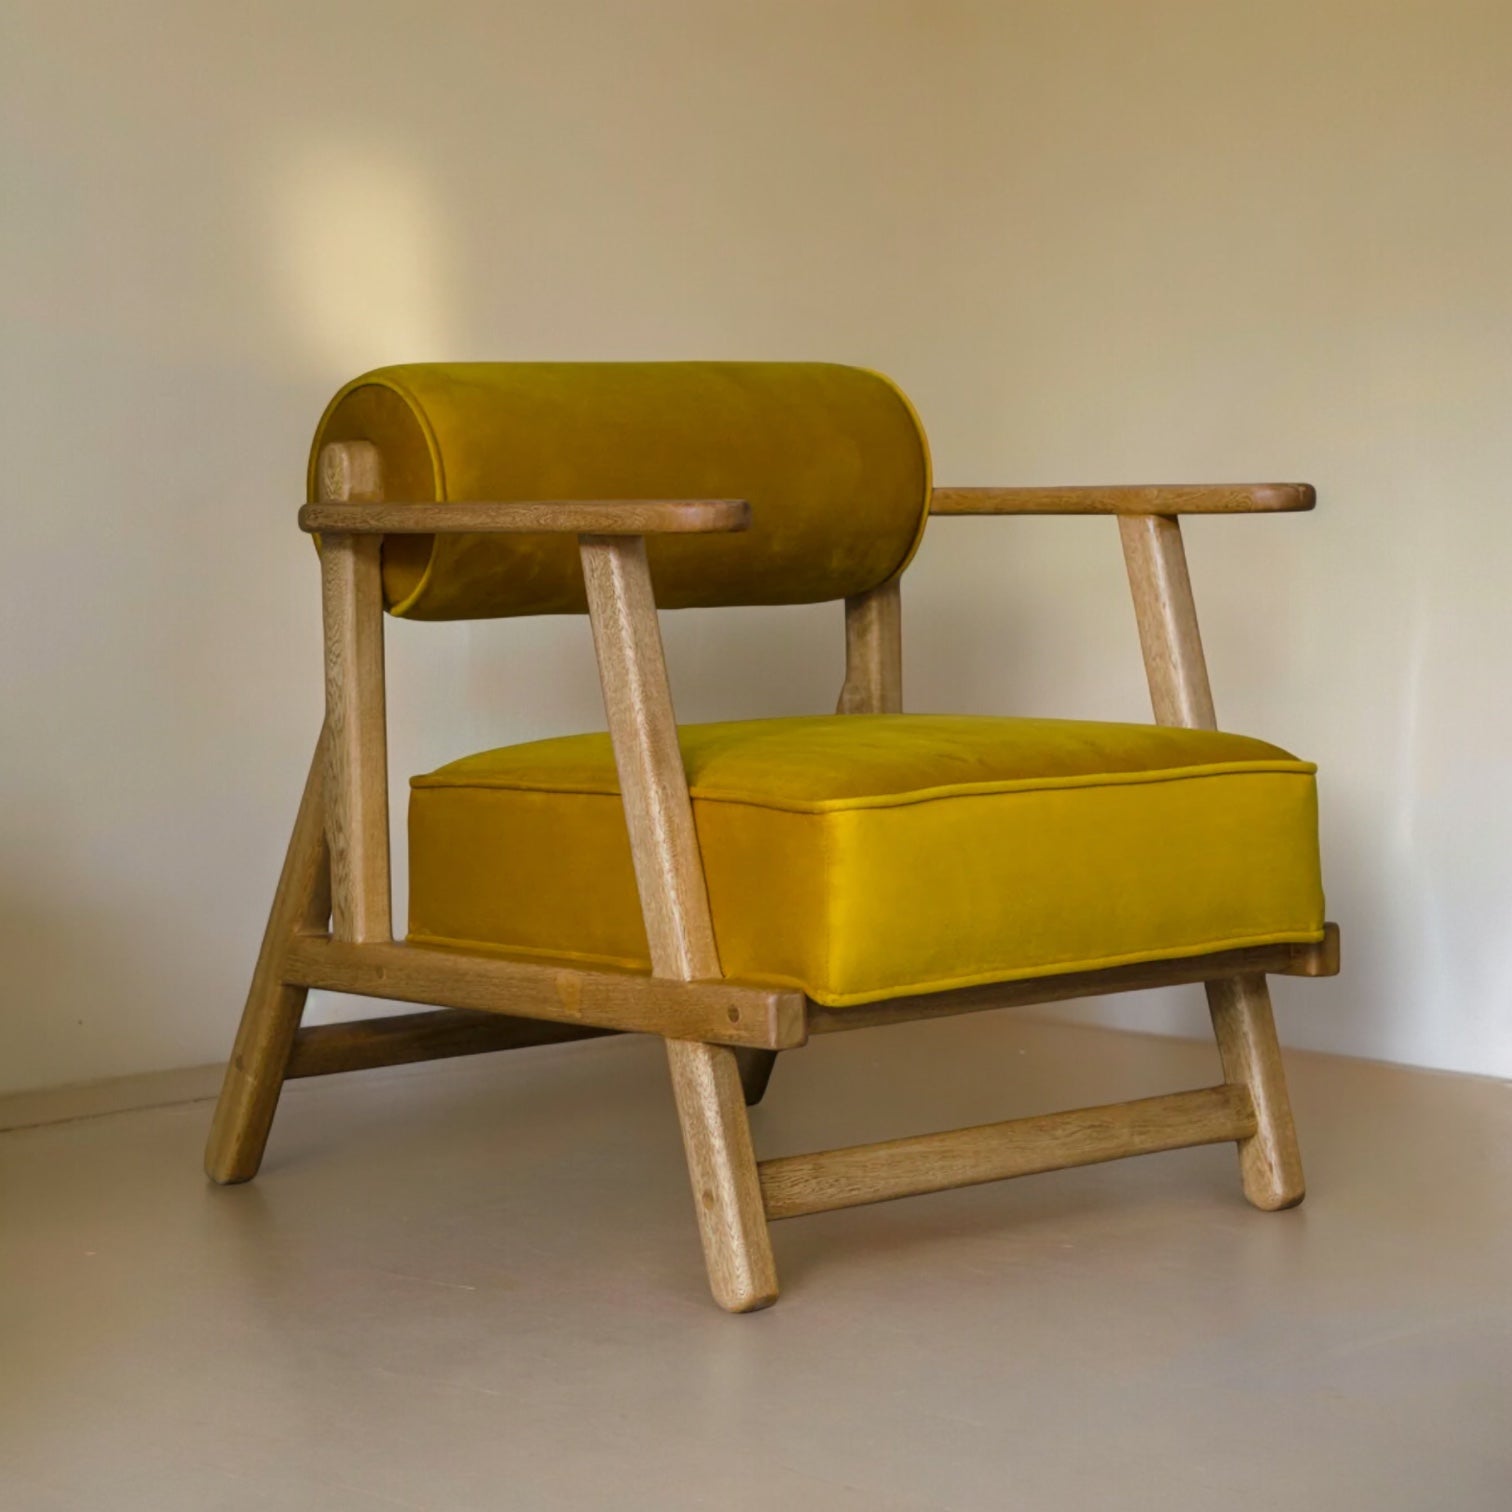 Yoya Lounge Chair by Chimiyu